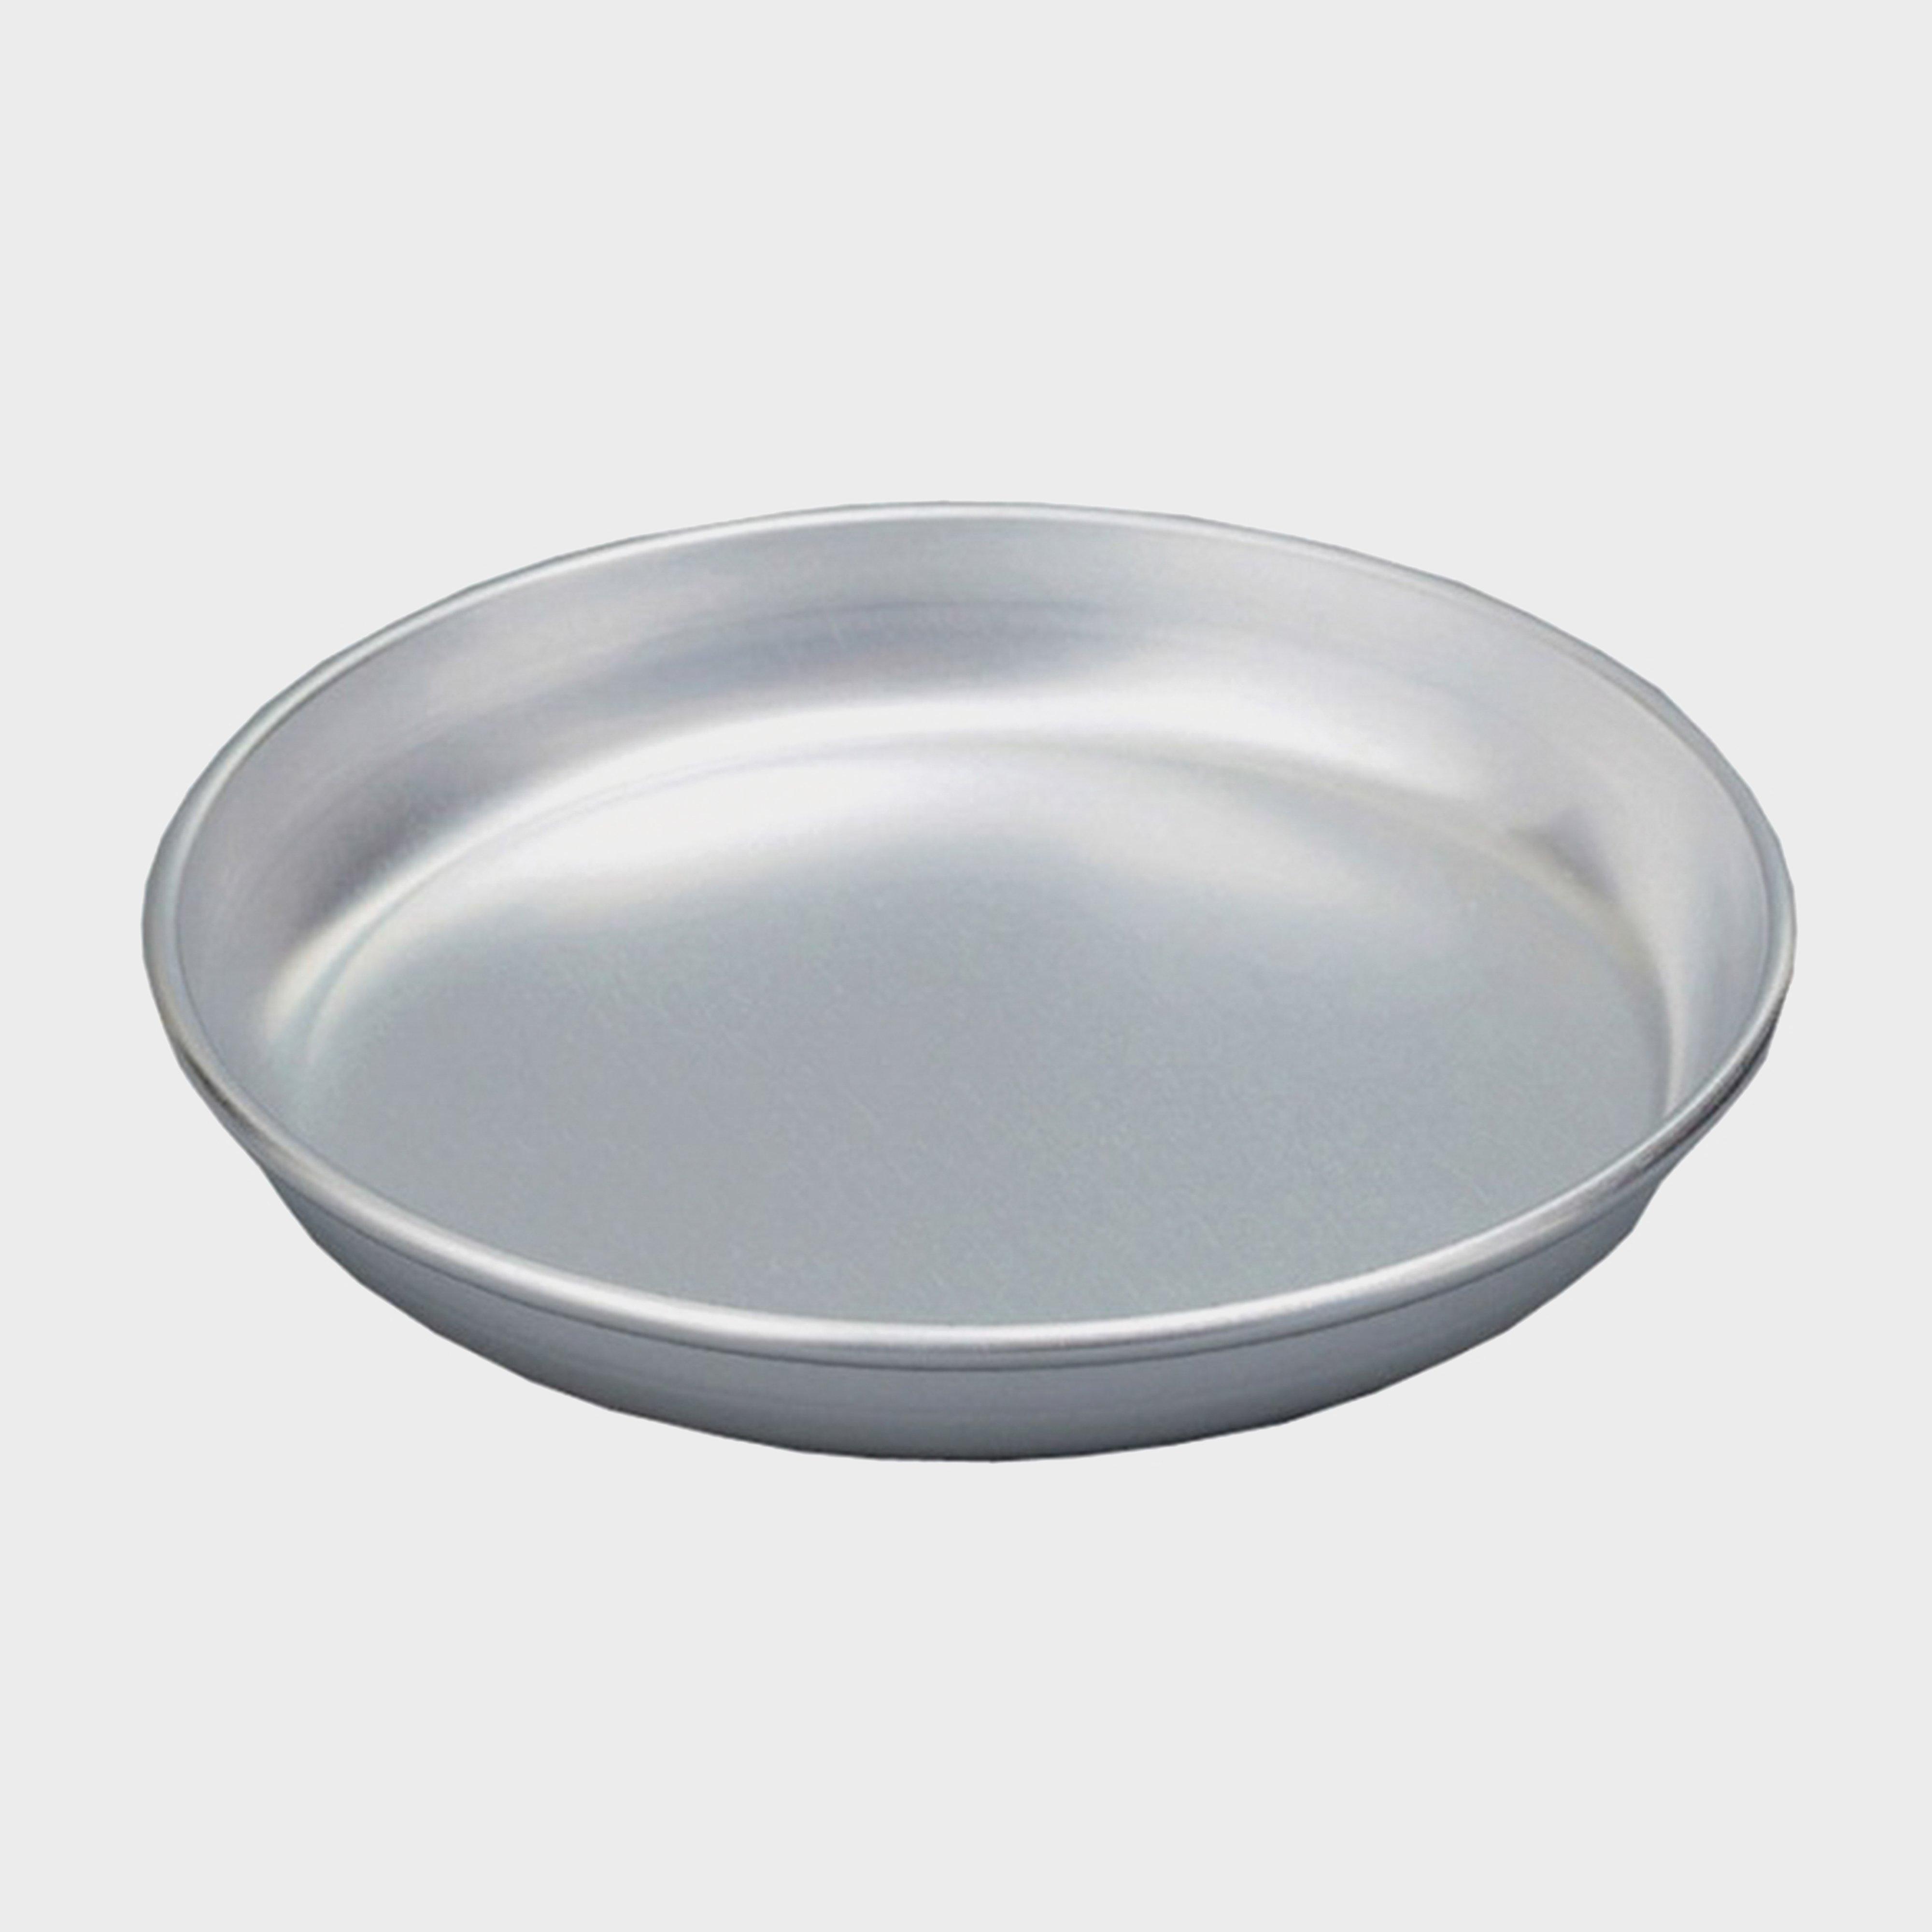 Aluminium Plate 20Cm - Khaki, Khaki